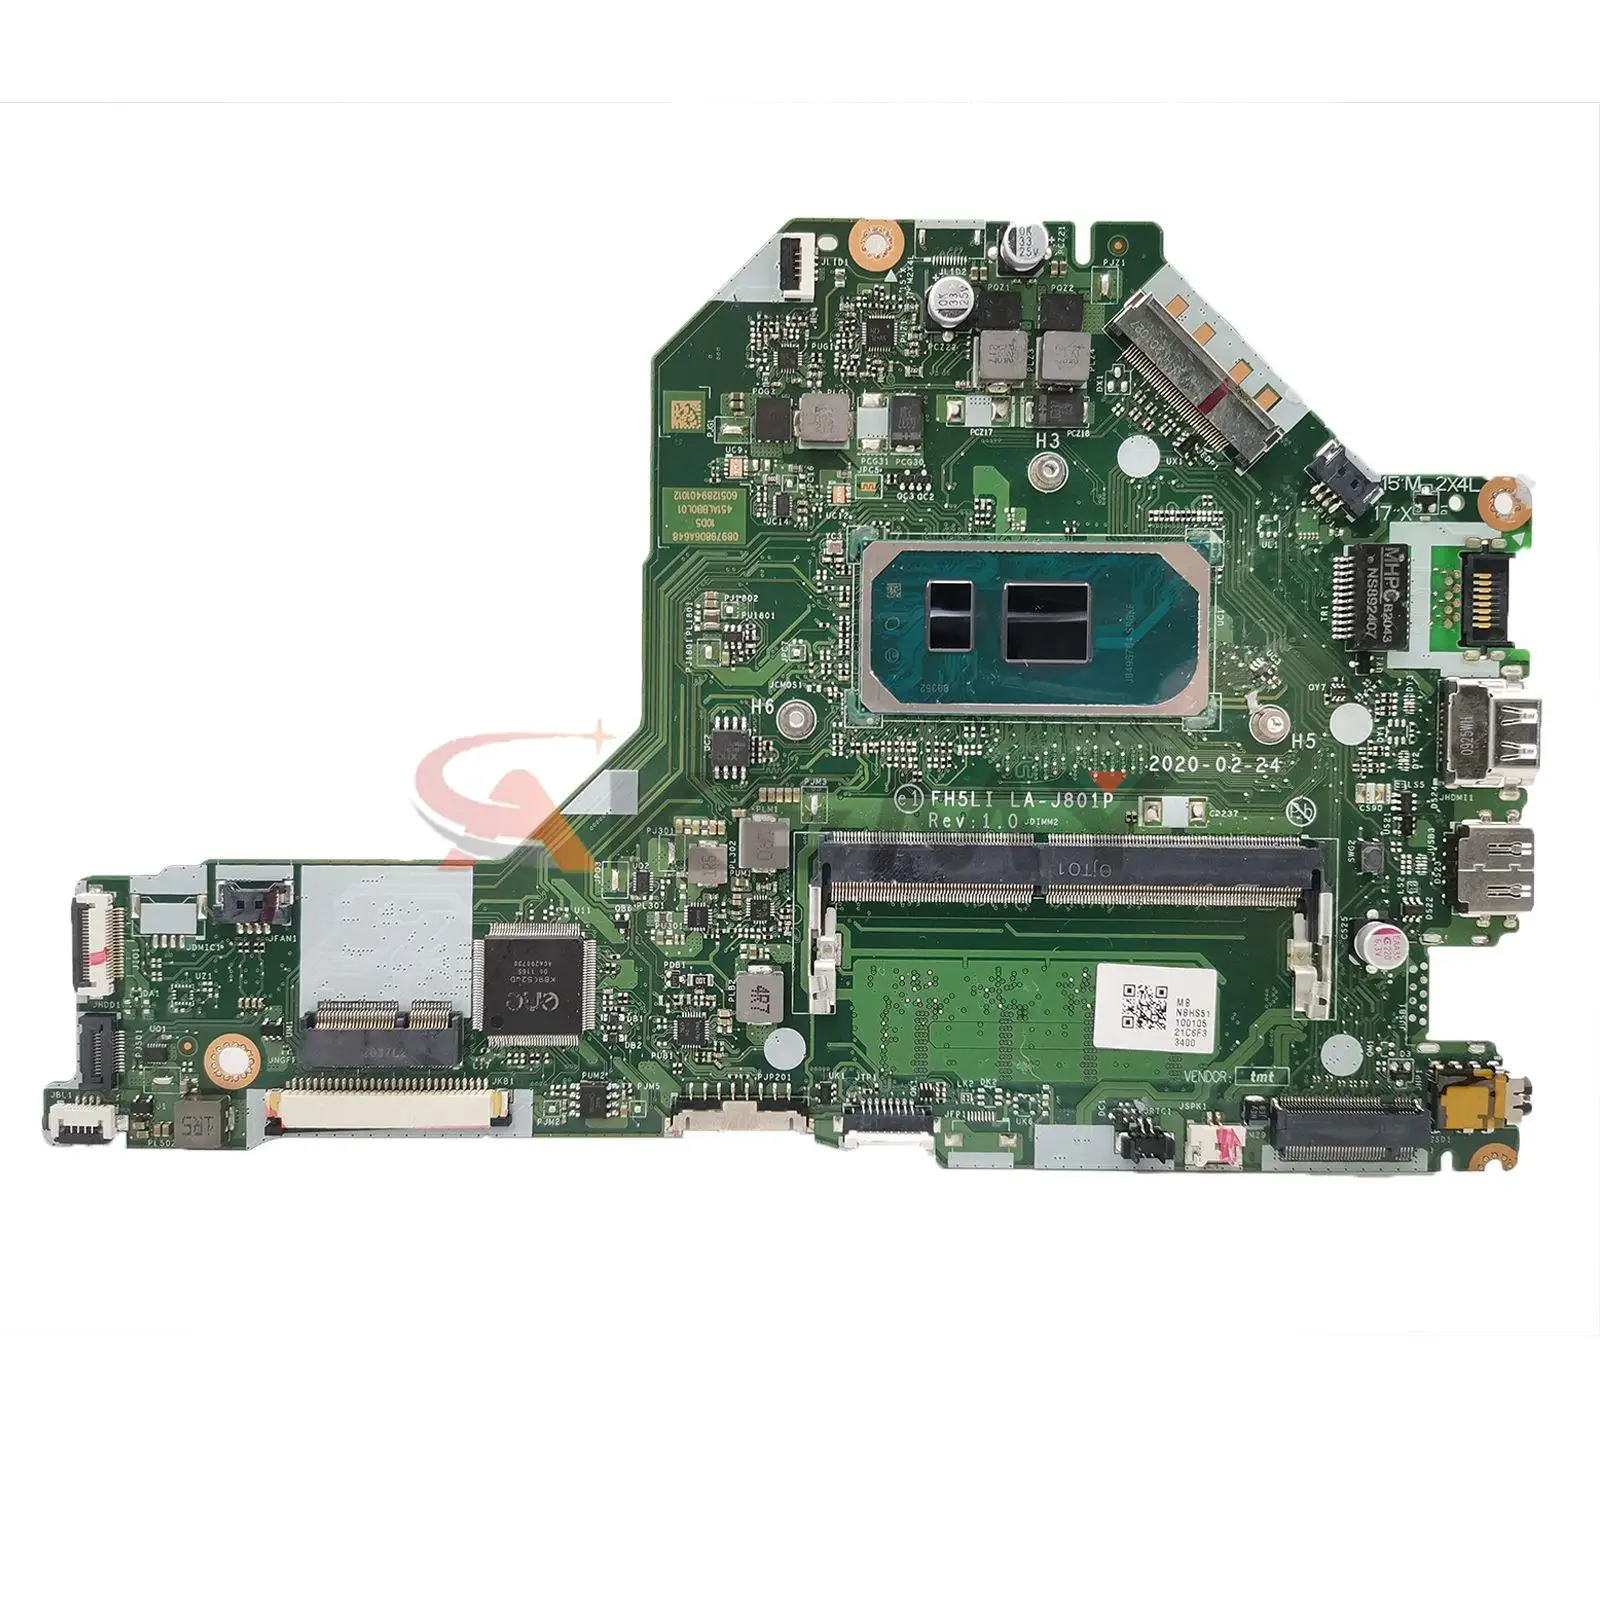 

FH5LI LA-J801P For ACER Aspire A315-56 Laptop Motherboard With CPU:I3-1005G1 I5-1035G1 I7-1065G7 RAM:4G DDR4 100% Tested